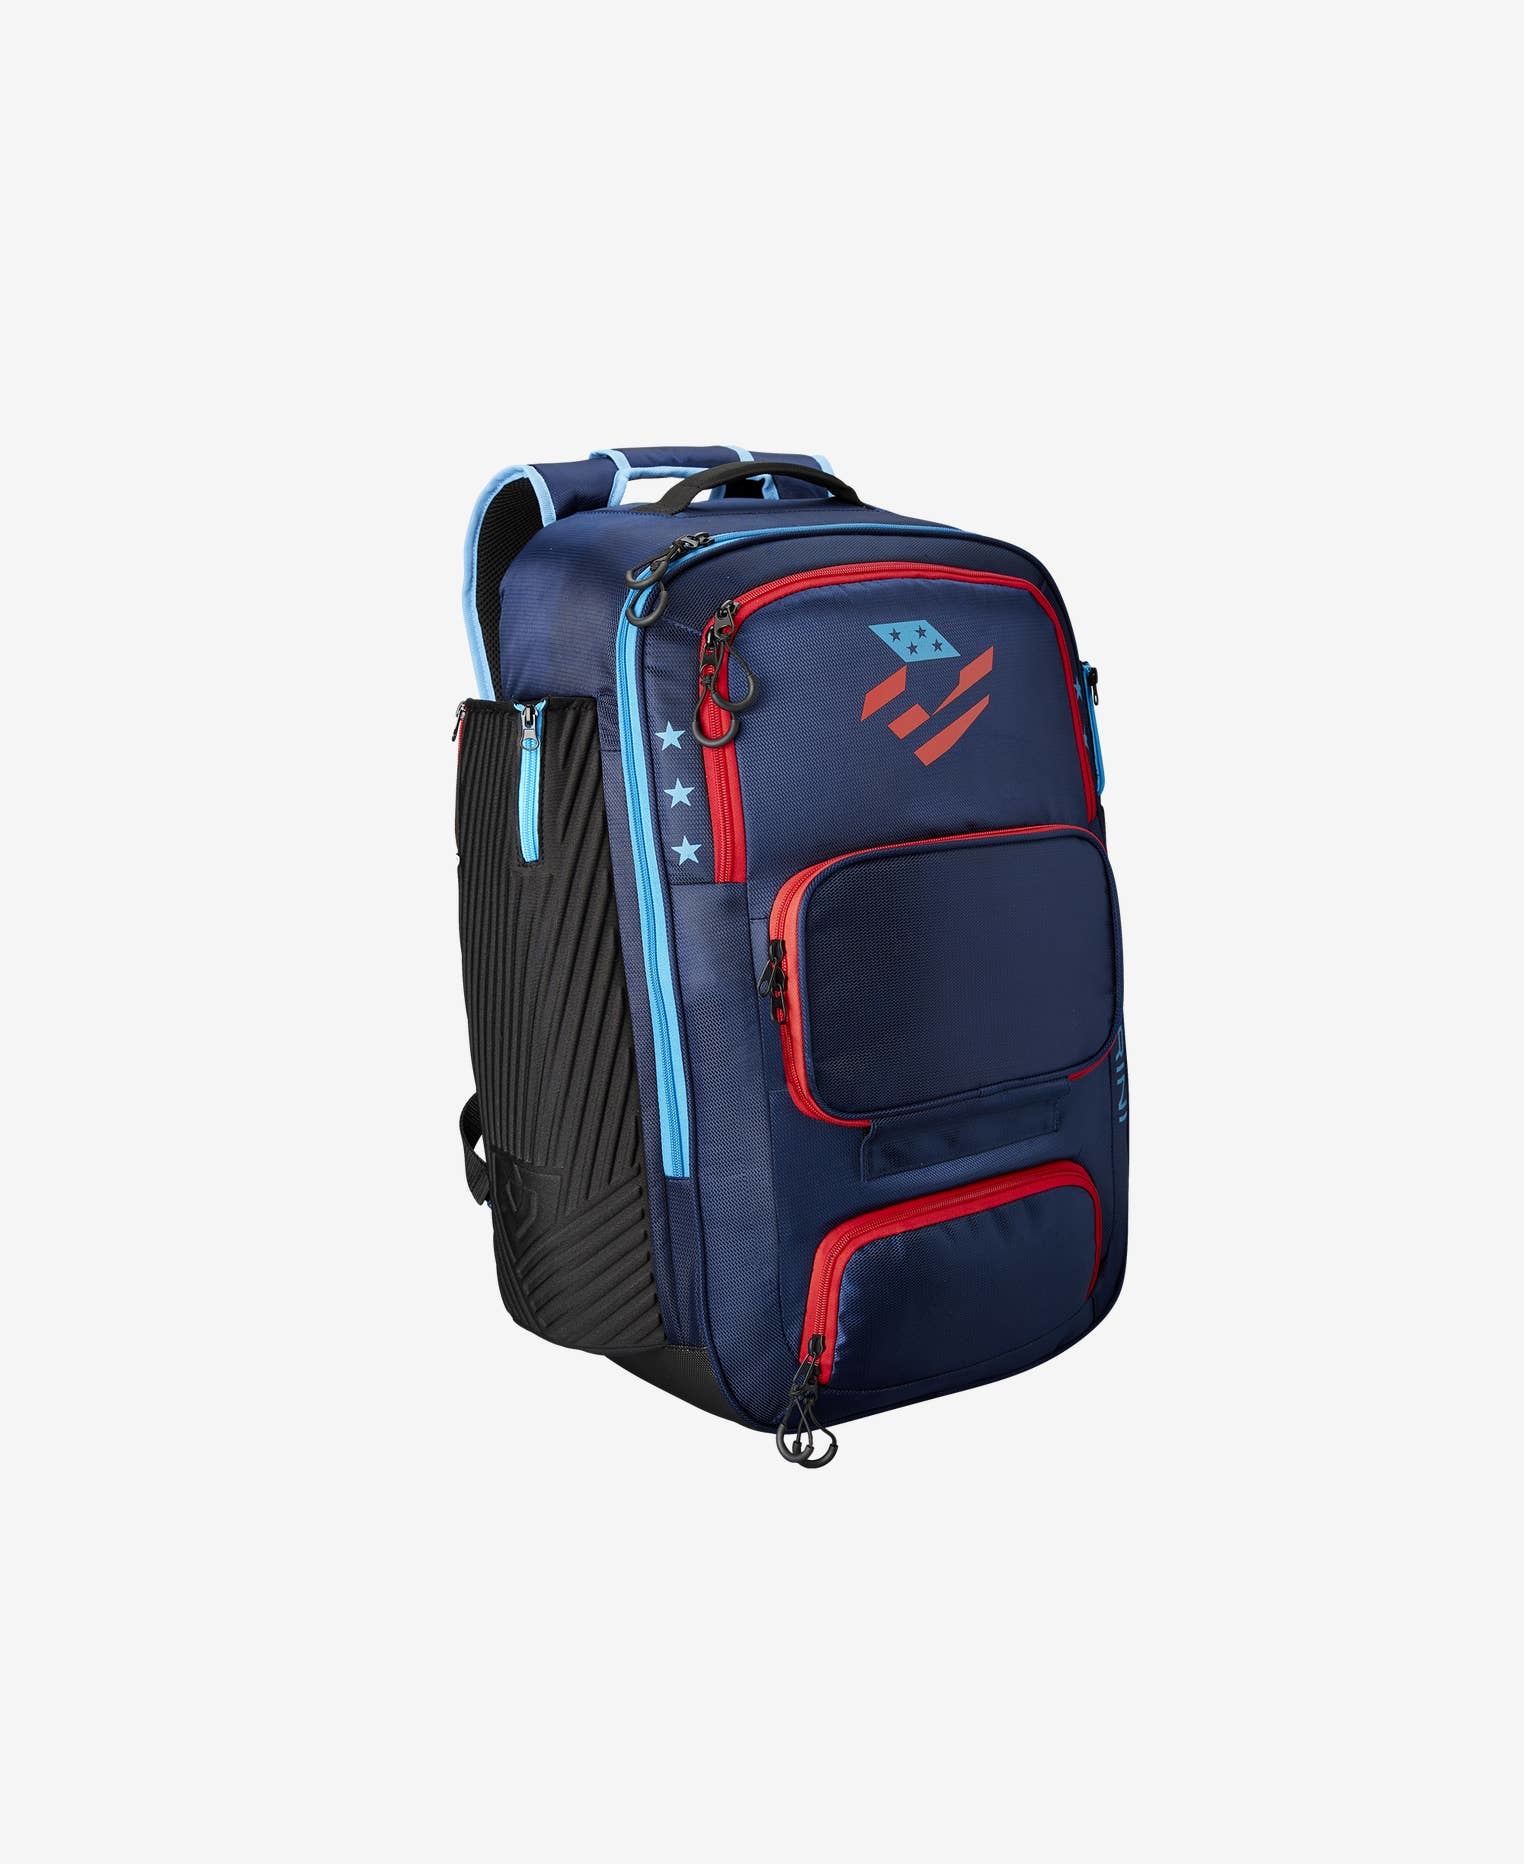 DeMarini Spectre backpack